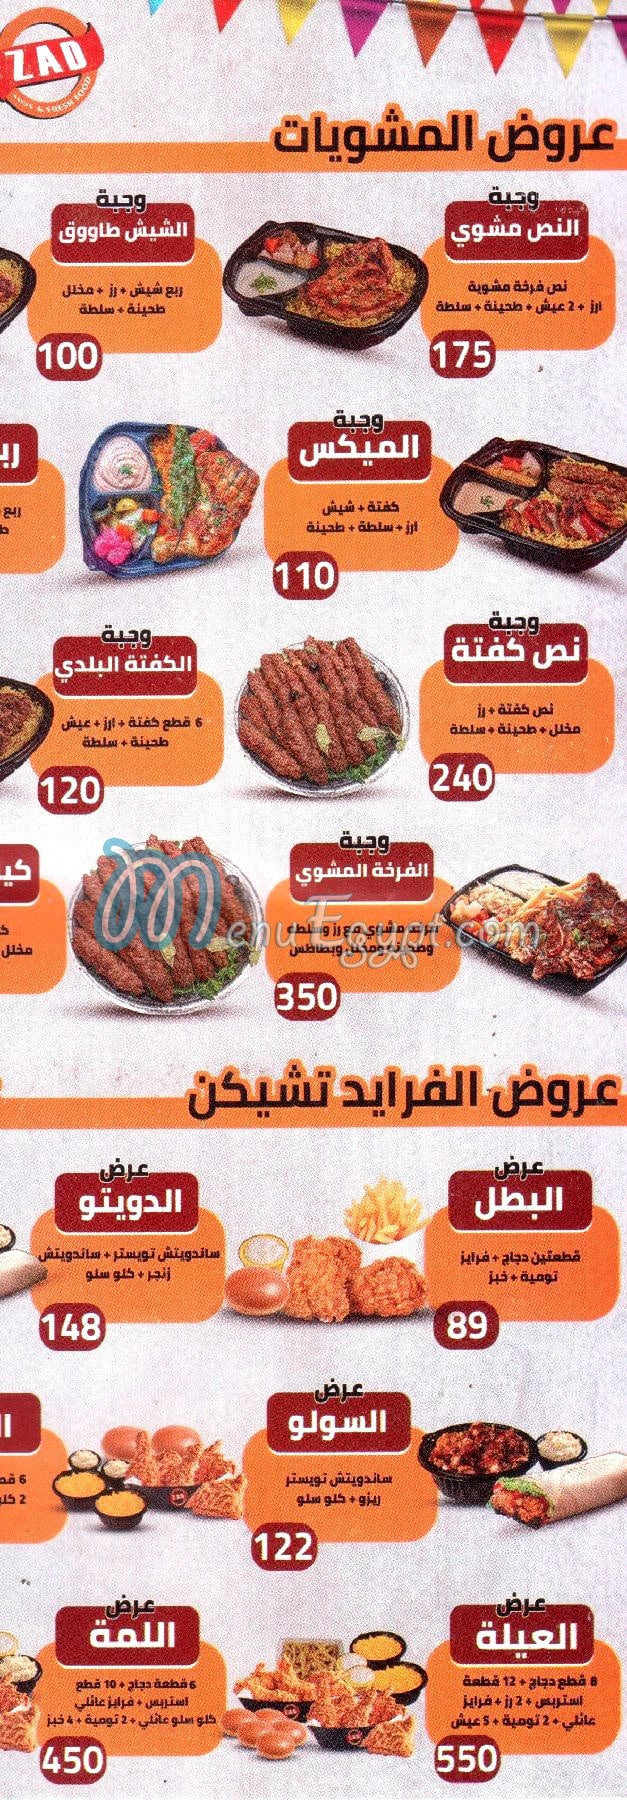 مطعم دجاج زاد مصر